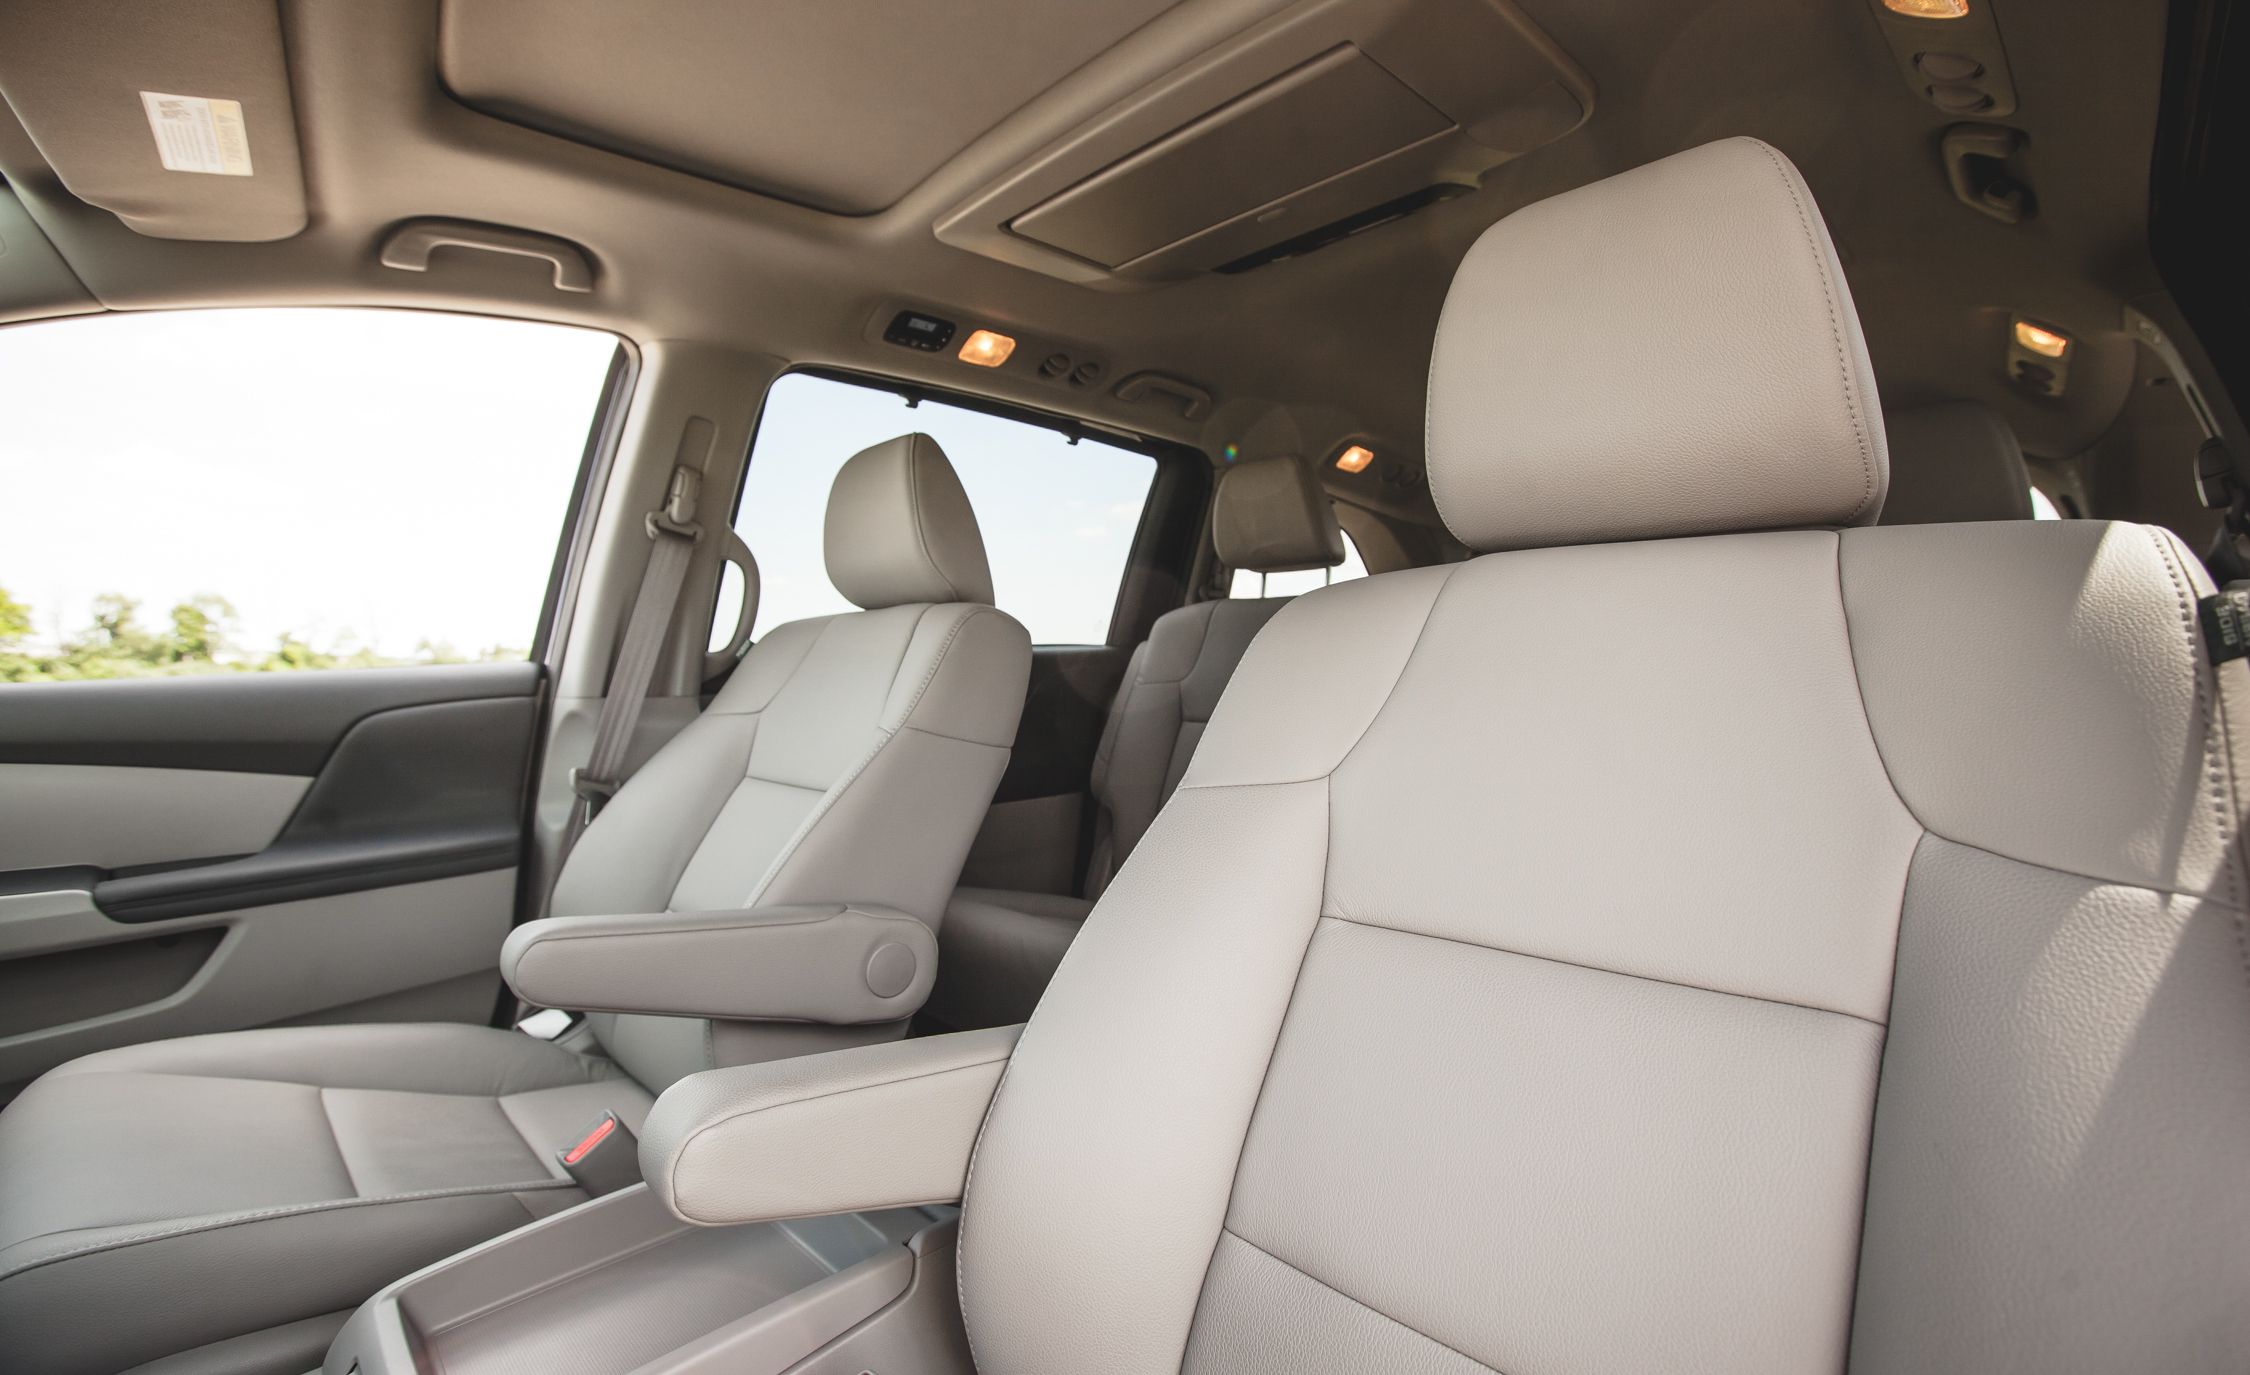 2014 Honda Odyssey Touring Elite Interior (View 7 of 19)